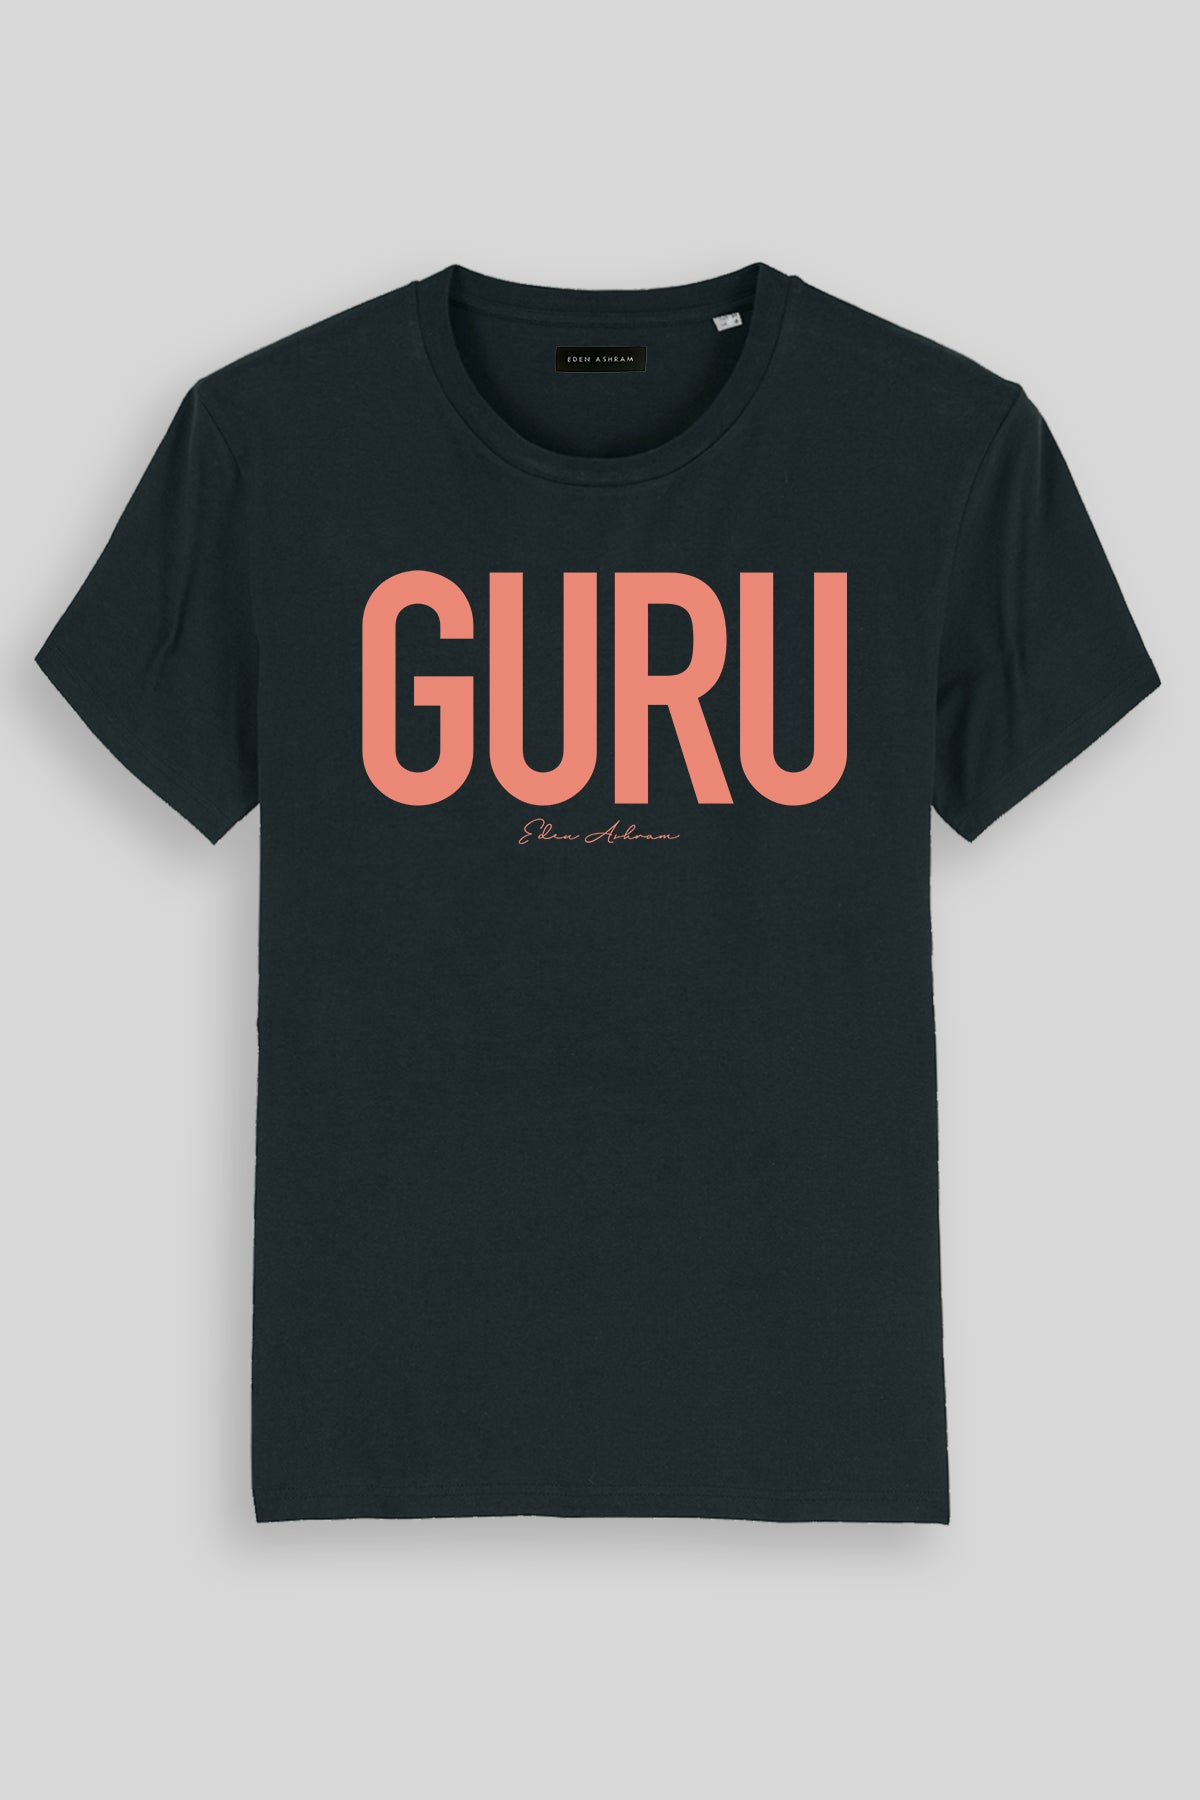 EDEN ASHRAM Guru Premium Classic T-Shirt Black